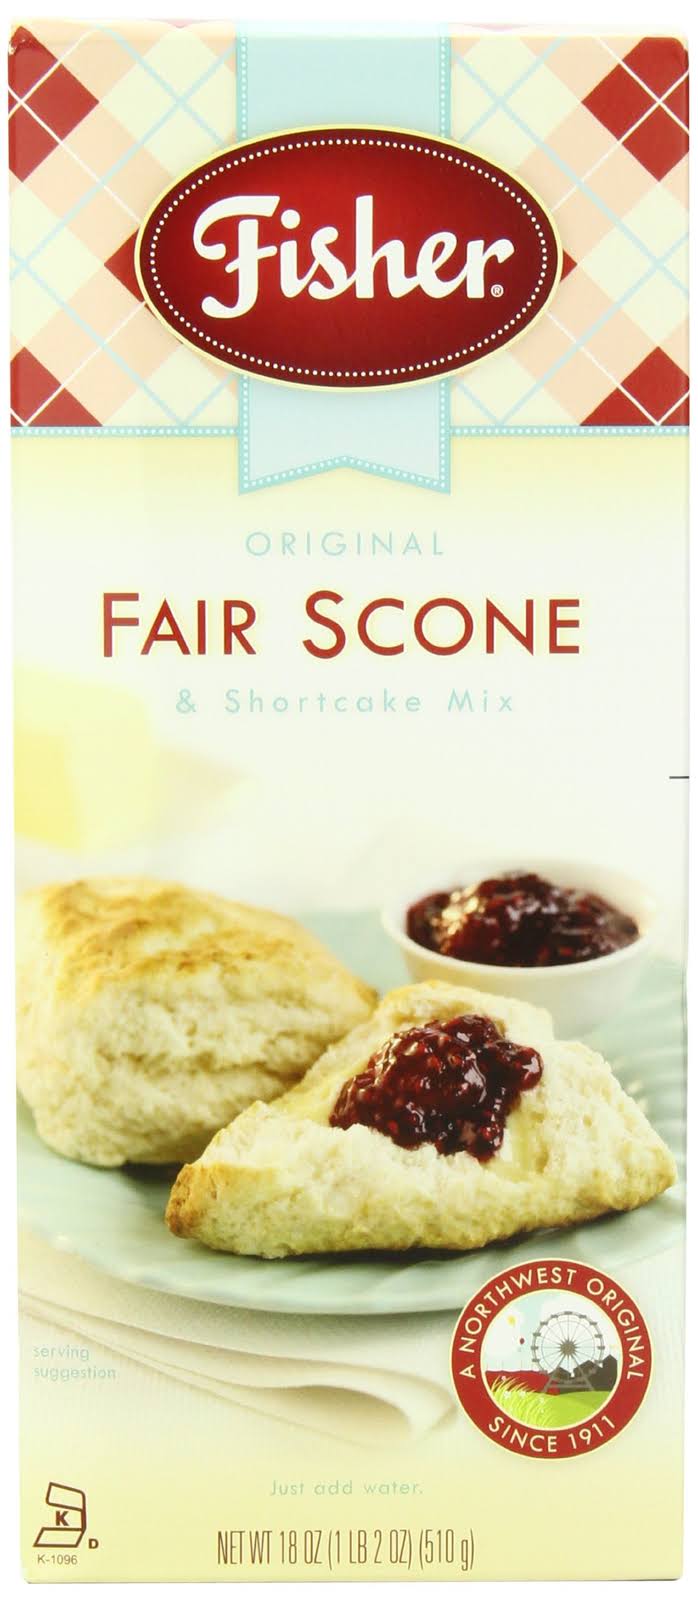 Fisher Original Fair Scone & Shortcake Mix - 510g